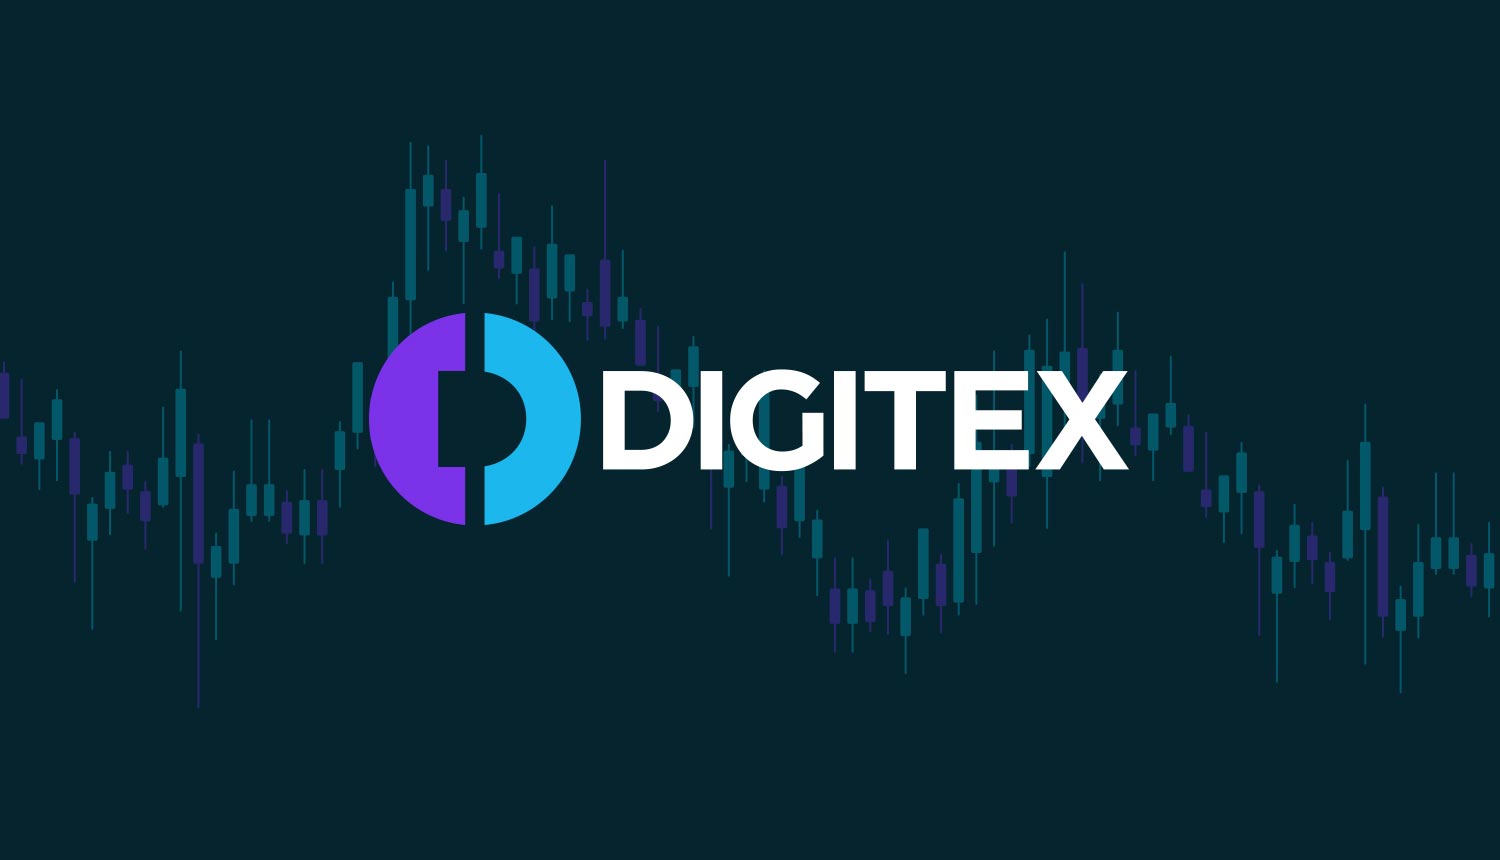 Digitex Futures Price Rises Following Exchange Launch Announcement